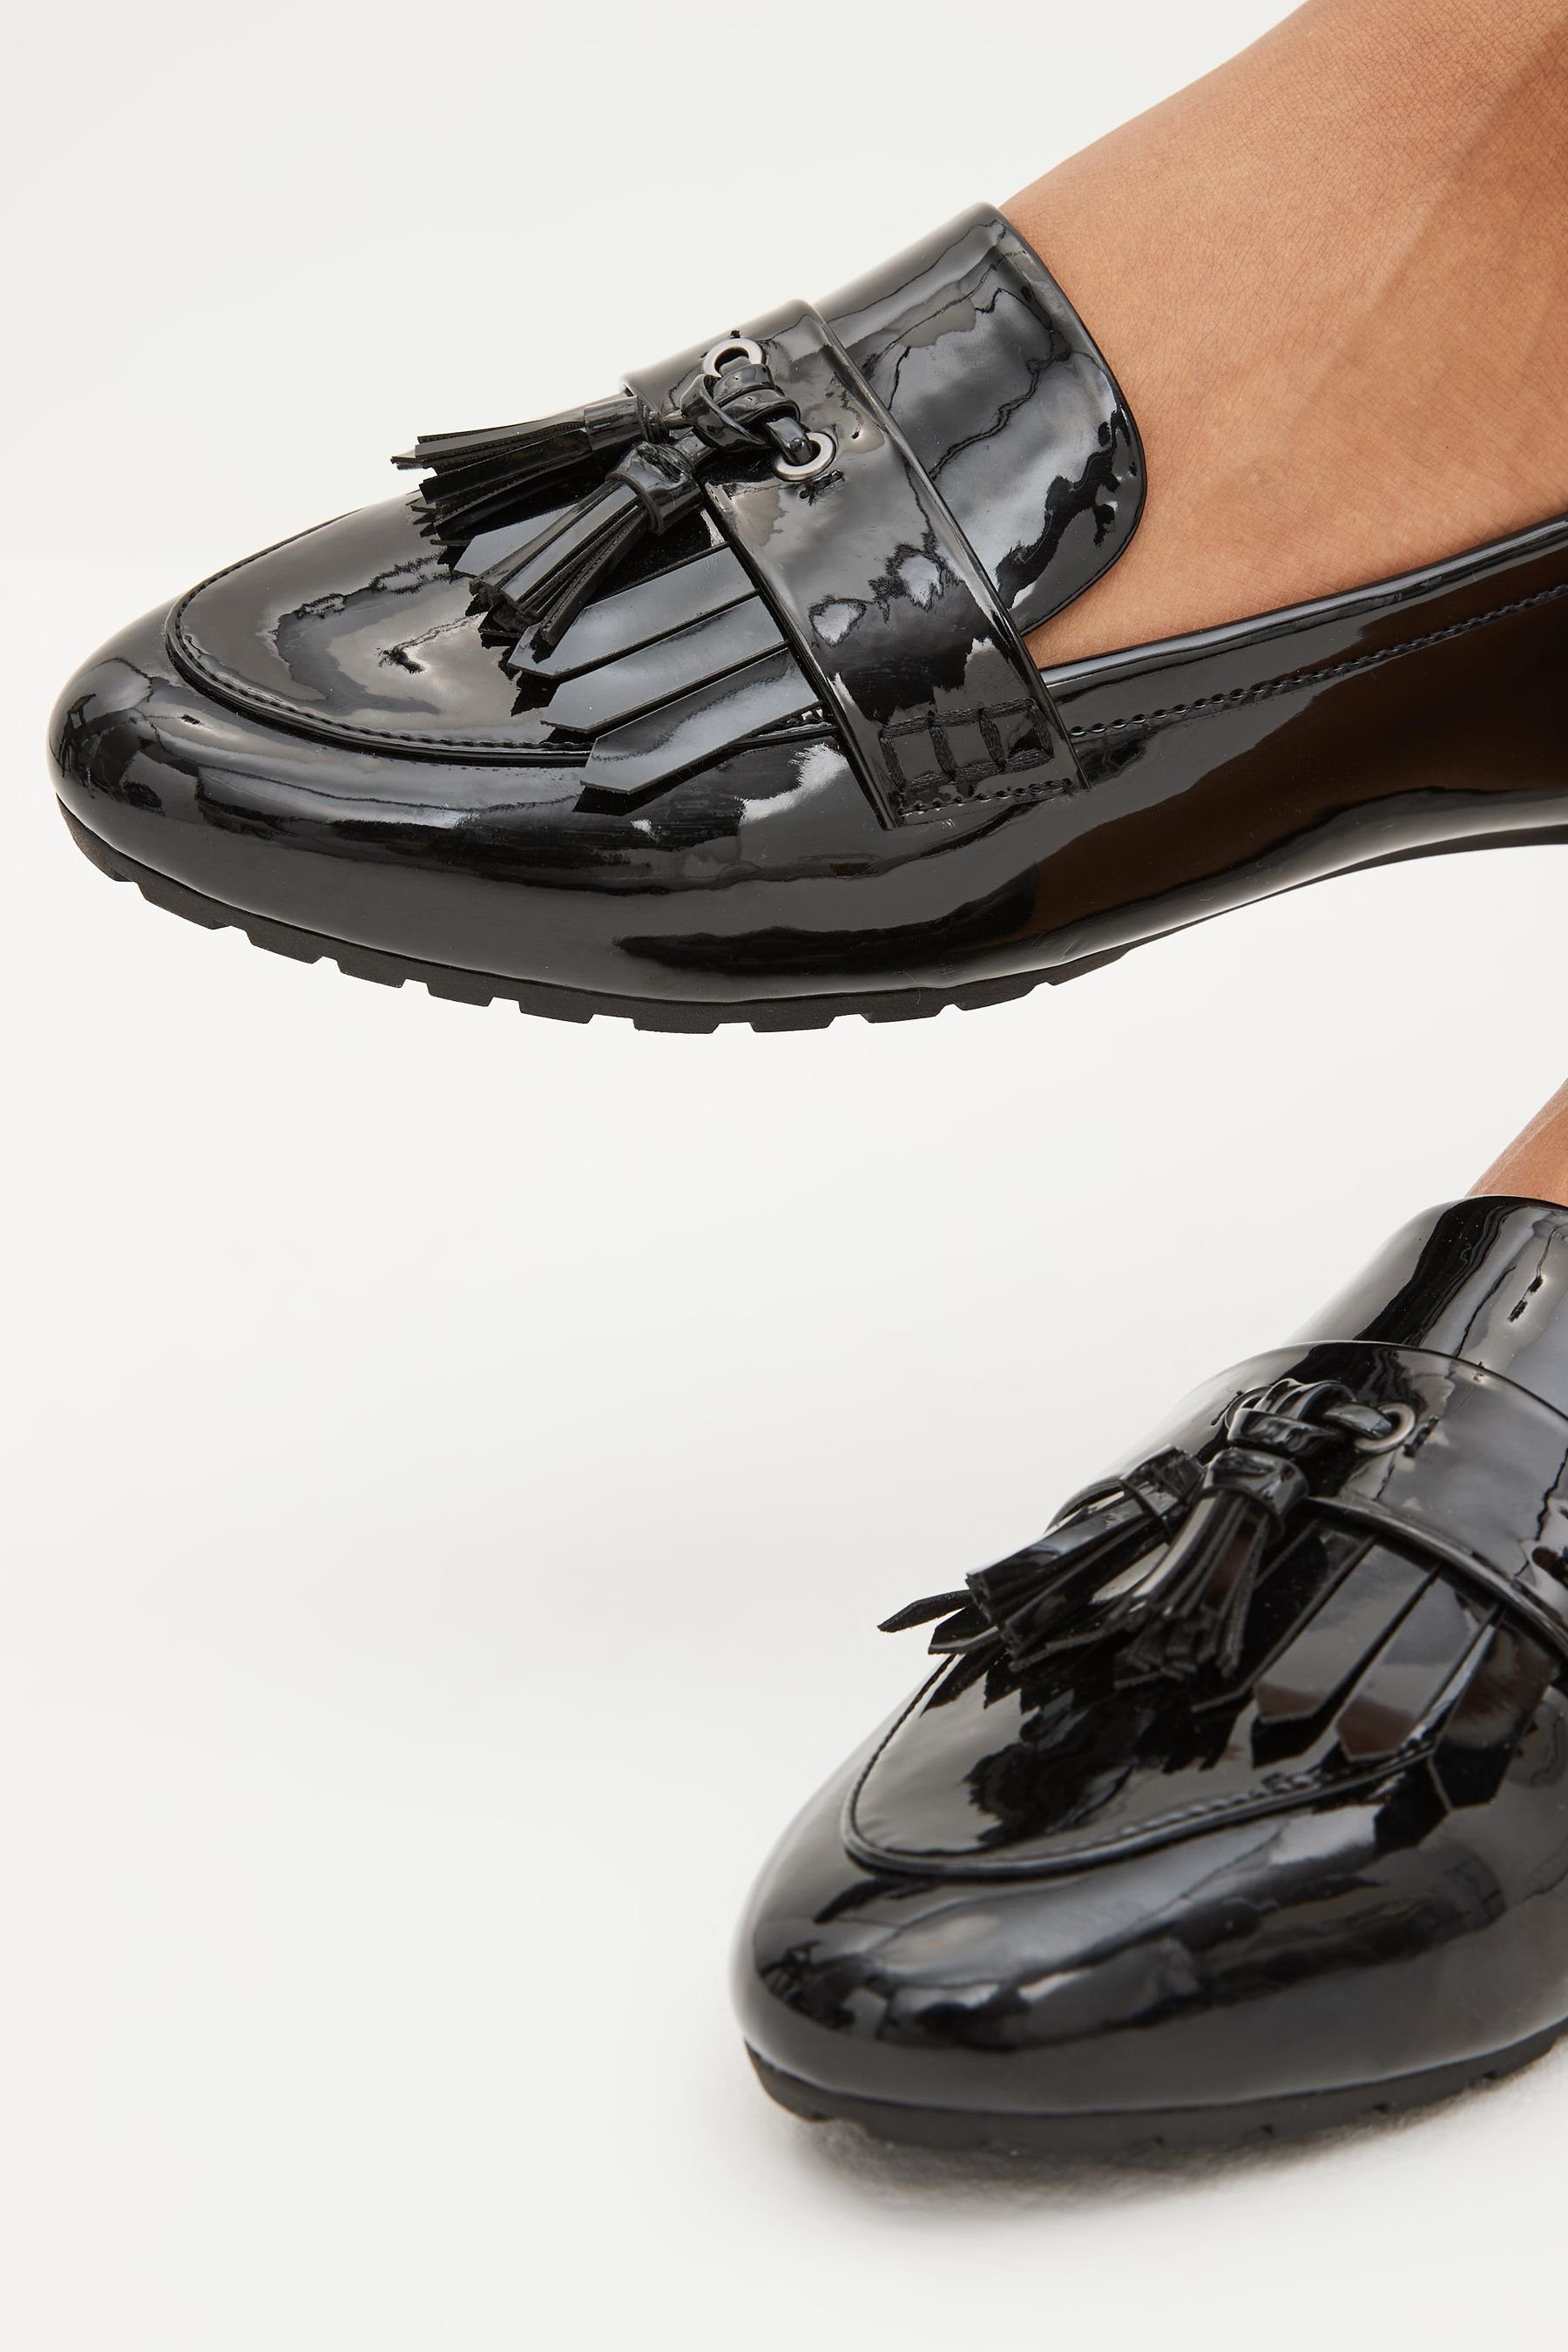 Tasselloafer Patent Loafer Black (1-tlg) mit Comfort® Profilsohle Next Forever